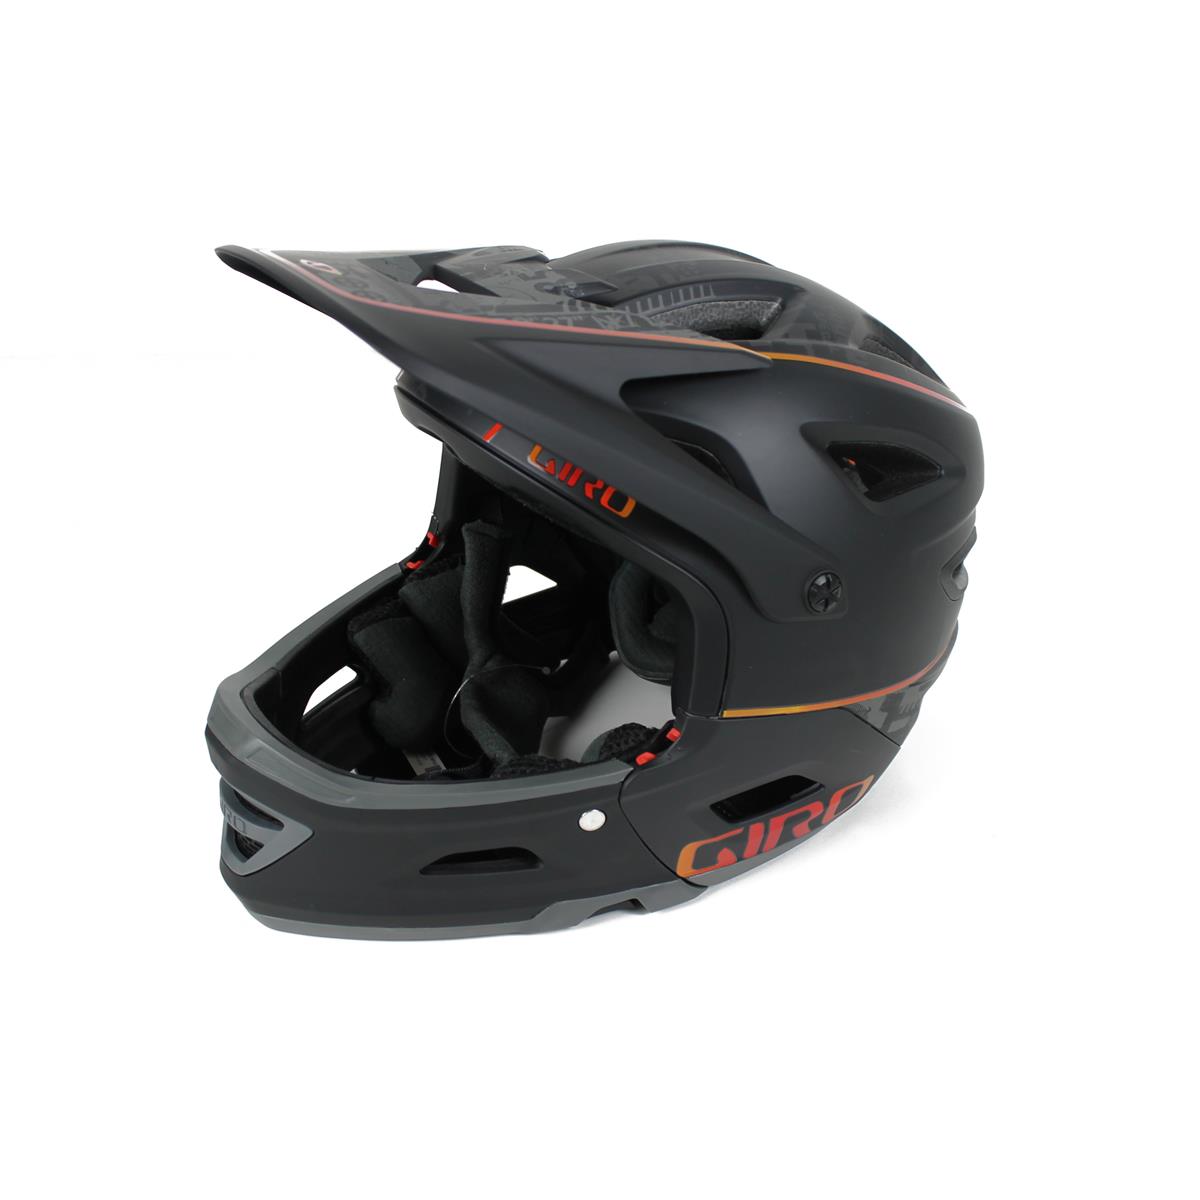 Helmet Switchblade Mips black size S (51-55cm)